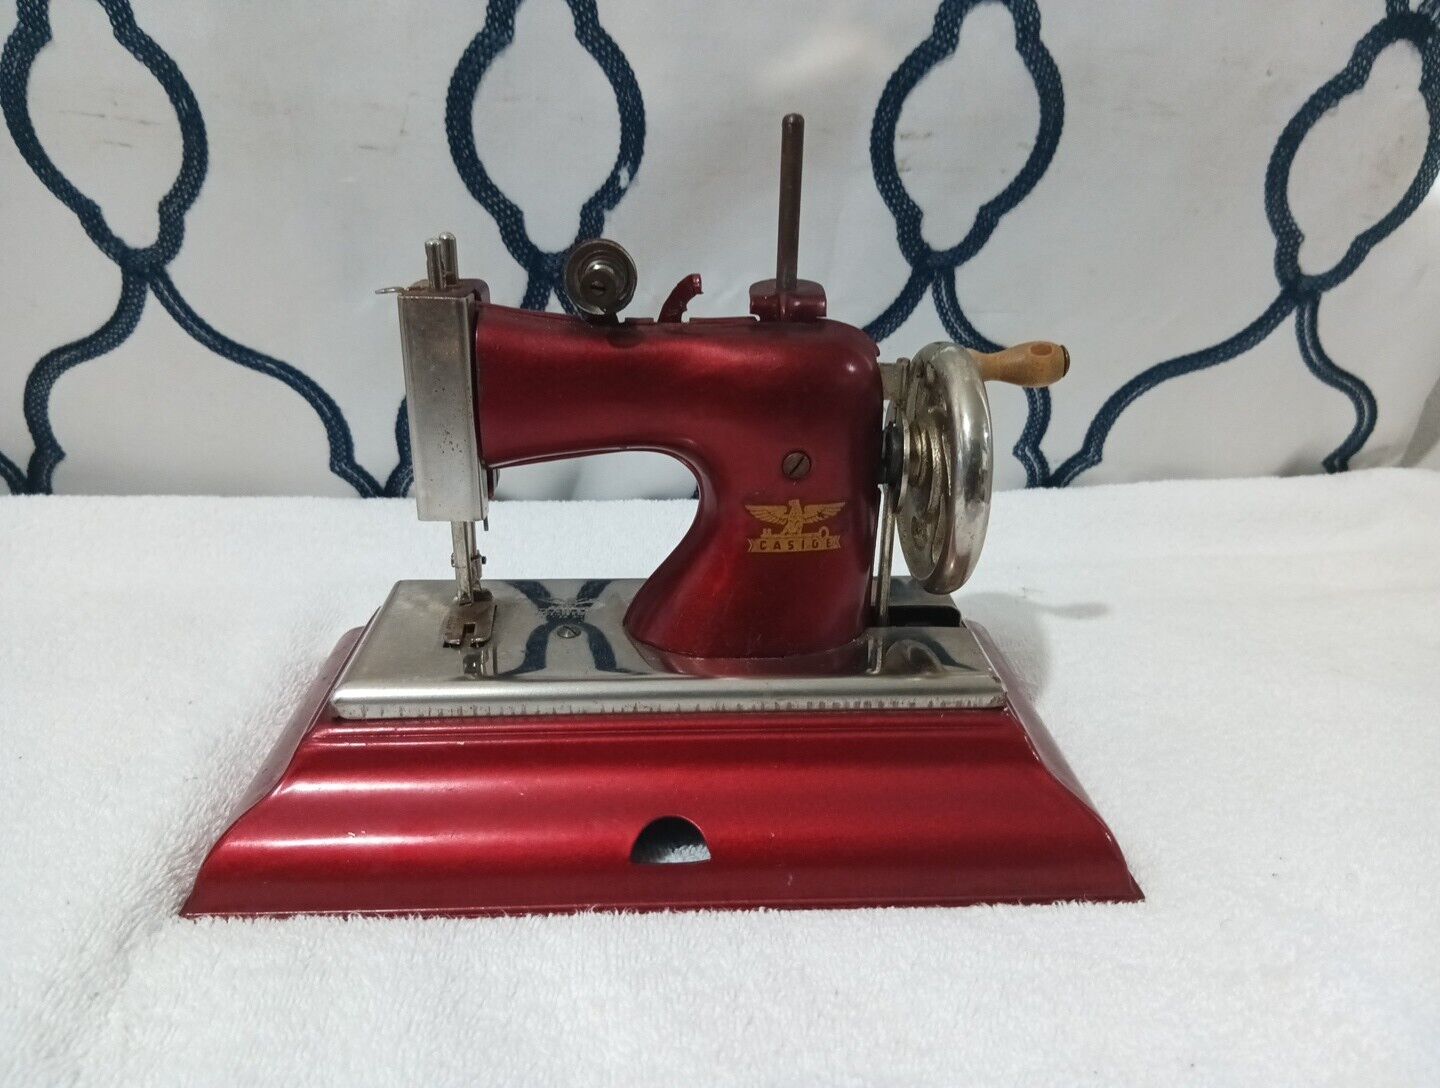 VINTAGE 1940’s “Casige” Mini Sewing Machine, Germany